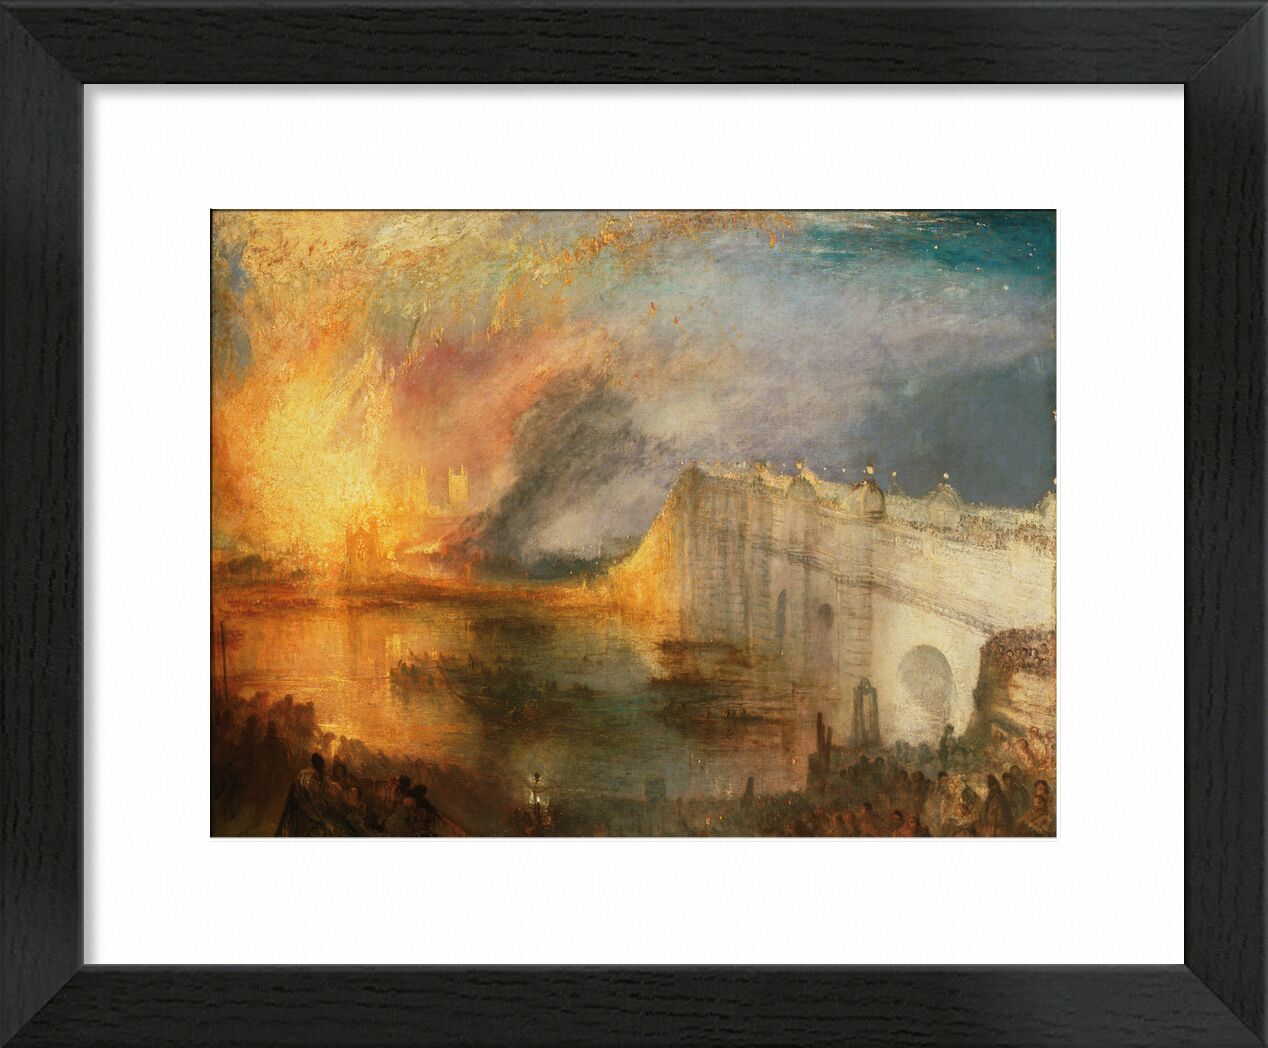 The Burning of the Houses of Lords and Commons - WILLIAM TURNER 1834 desde Bellas artes, Prodi Art, Cámara de los Lores, Señores, fuego, WILLIAM TURNER, pintura, Londres